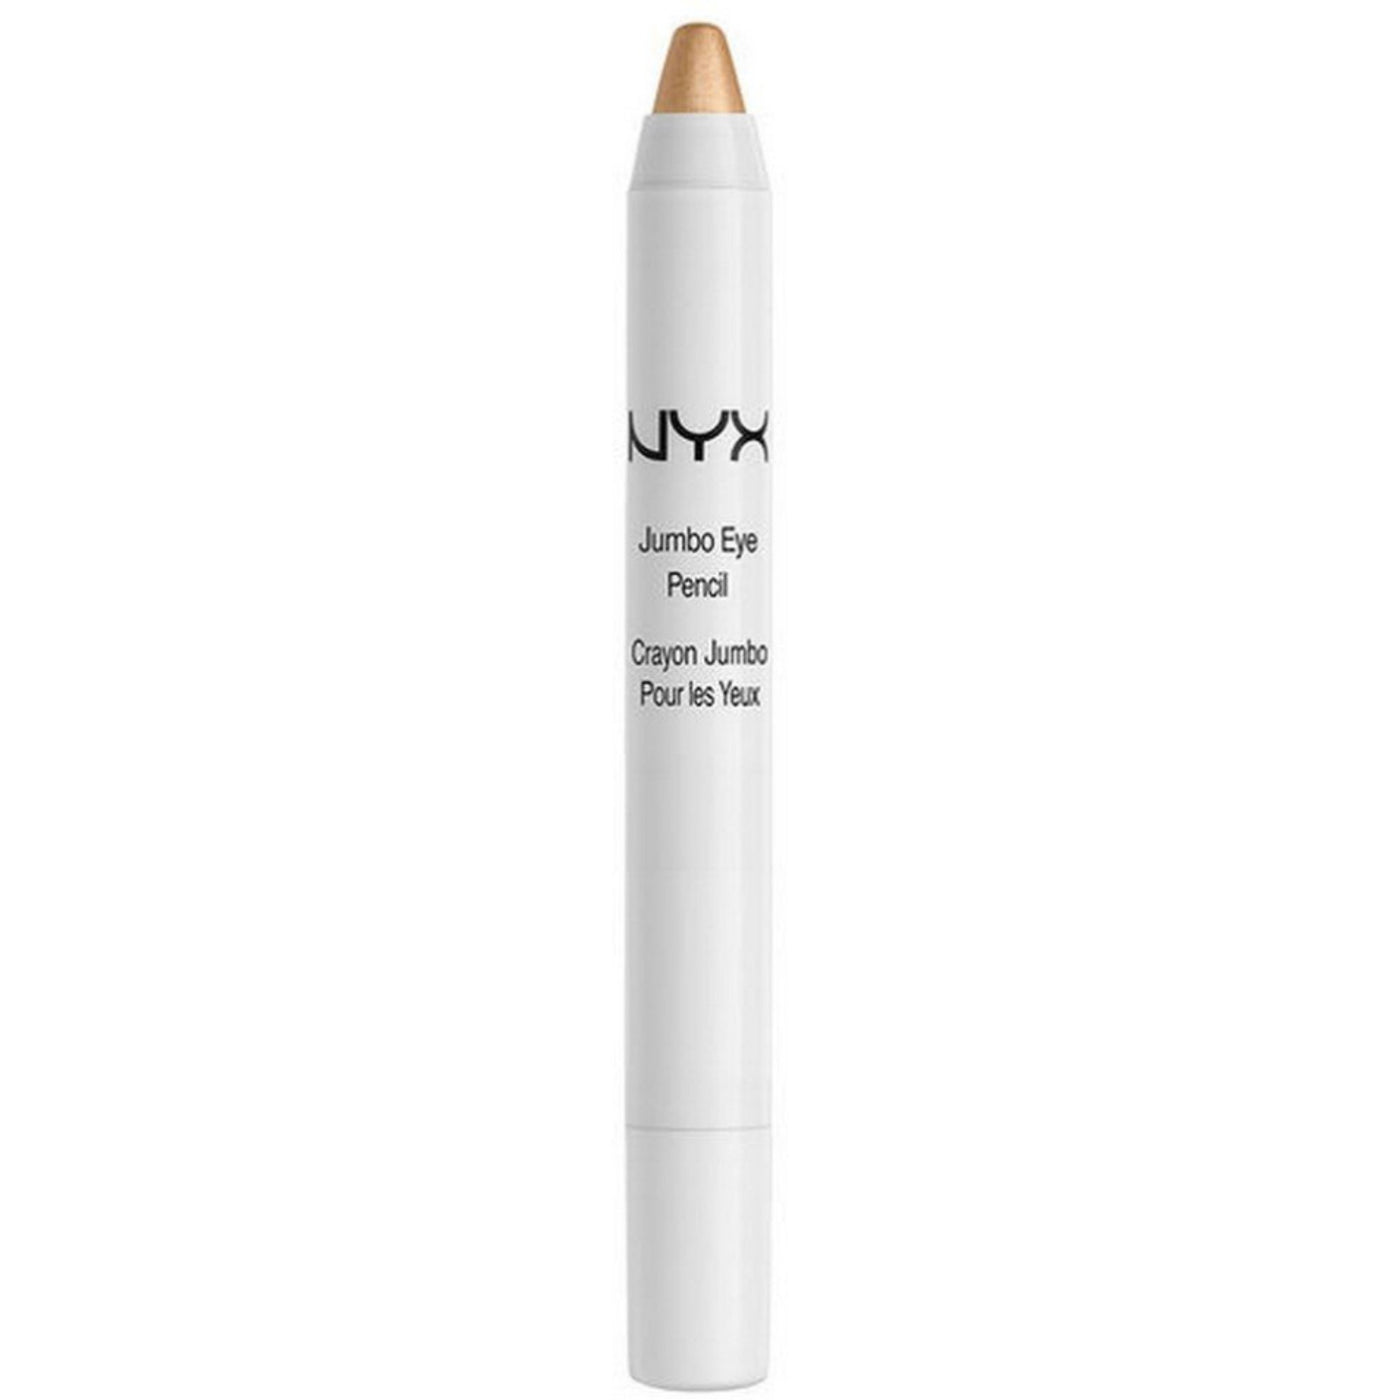 NYX Jumbo Eye Pencil - Cashmere Lot of 144